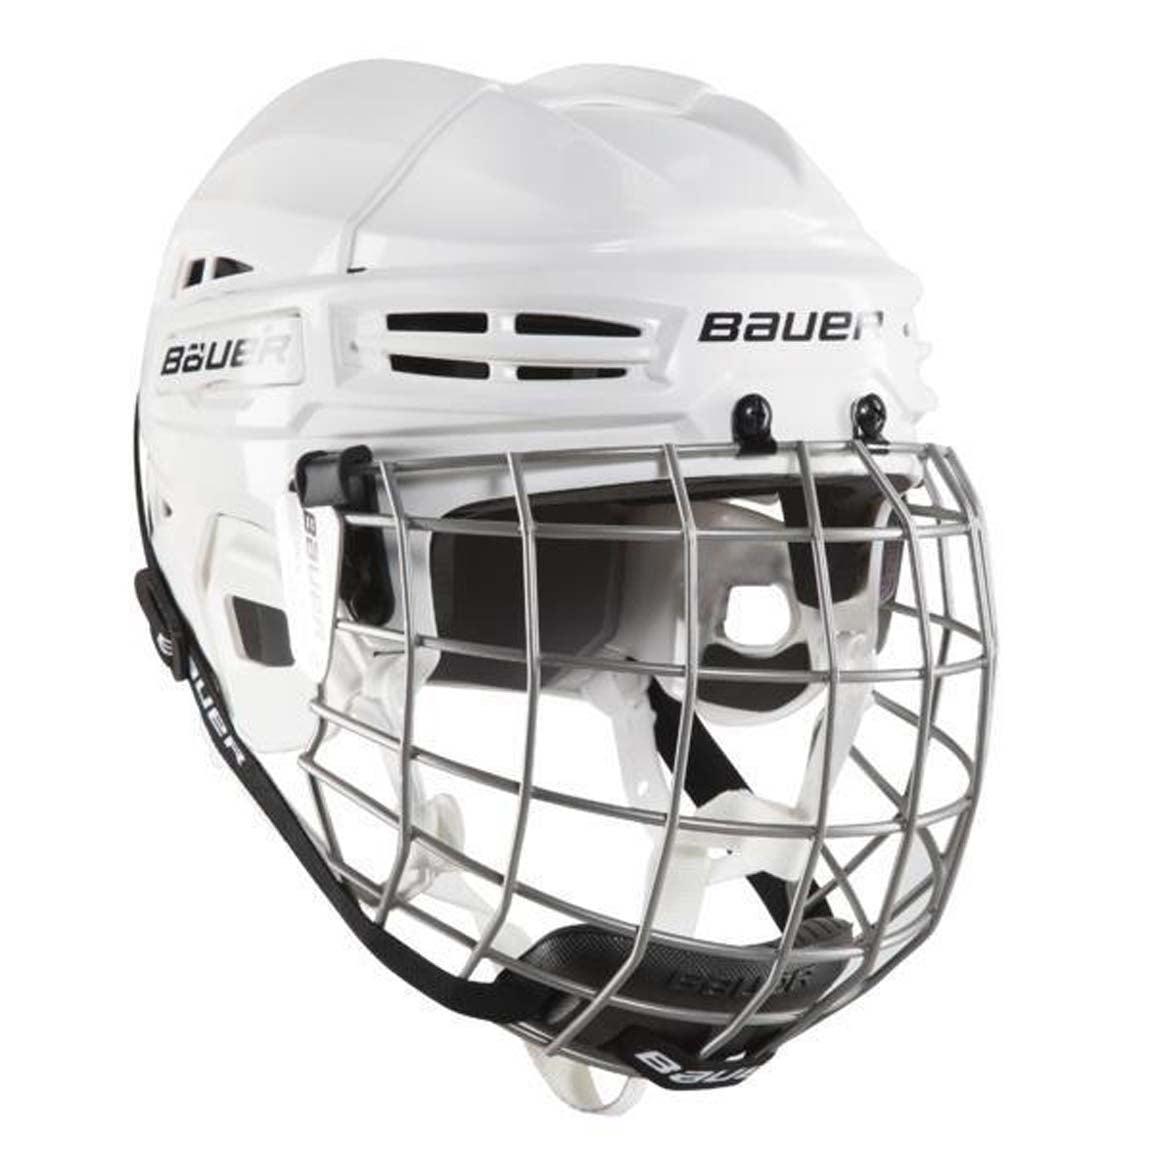 IMS 5.0 Hockey Helmet Combo - Sports Excellence